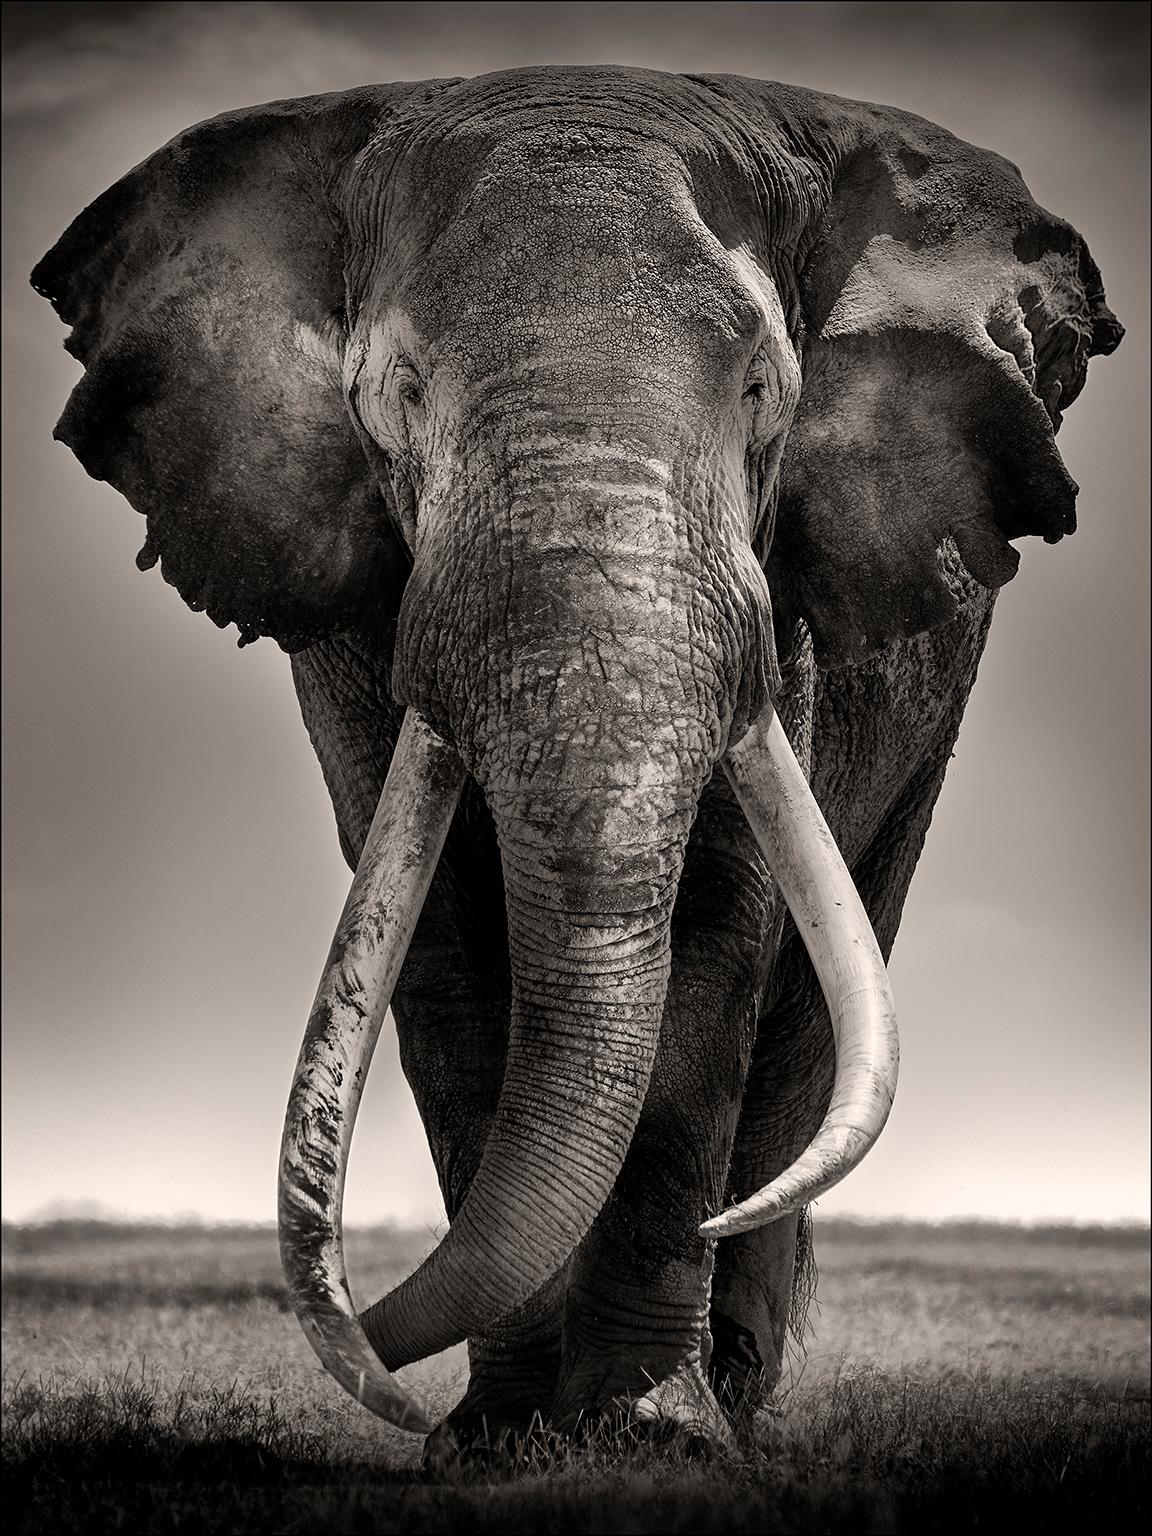 Joachim Schmeisser Black and White Photograph - Preserver of Peace I, animal, wildlife, black and white photography, elephant